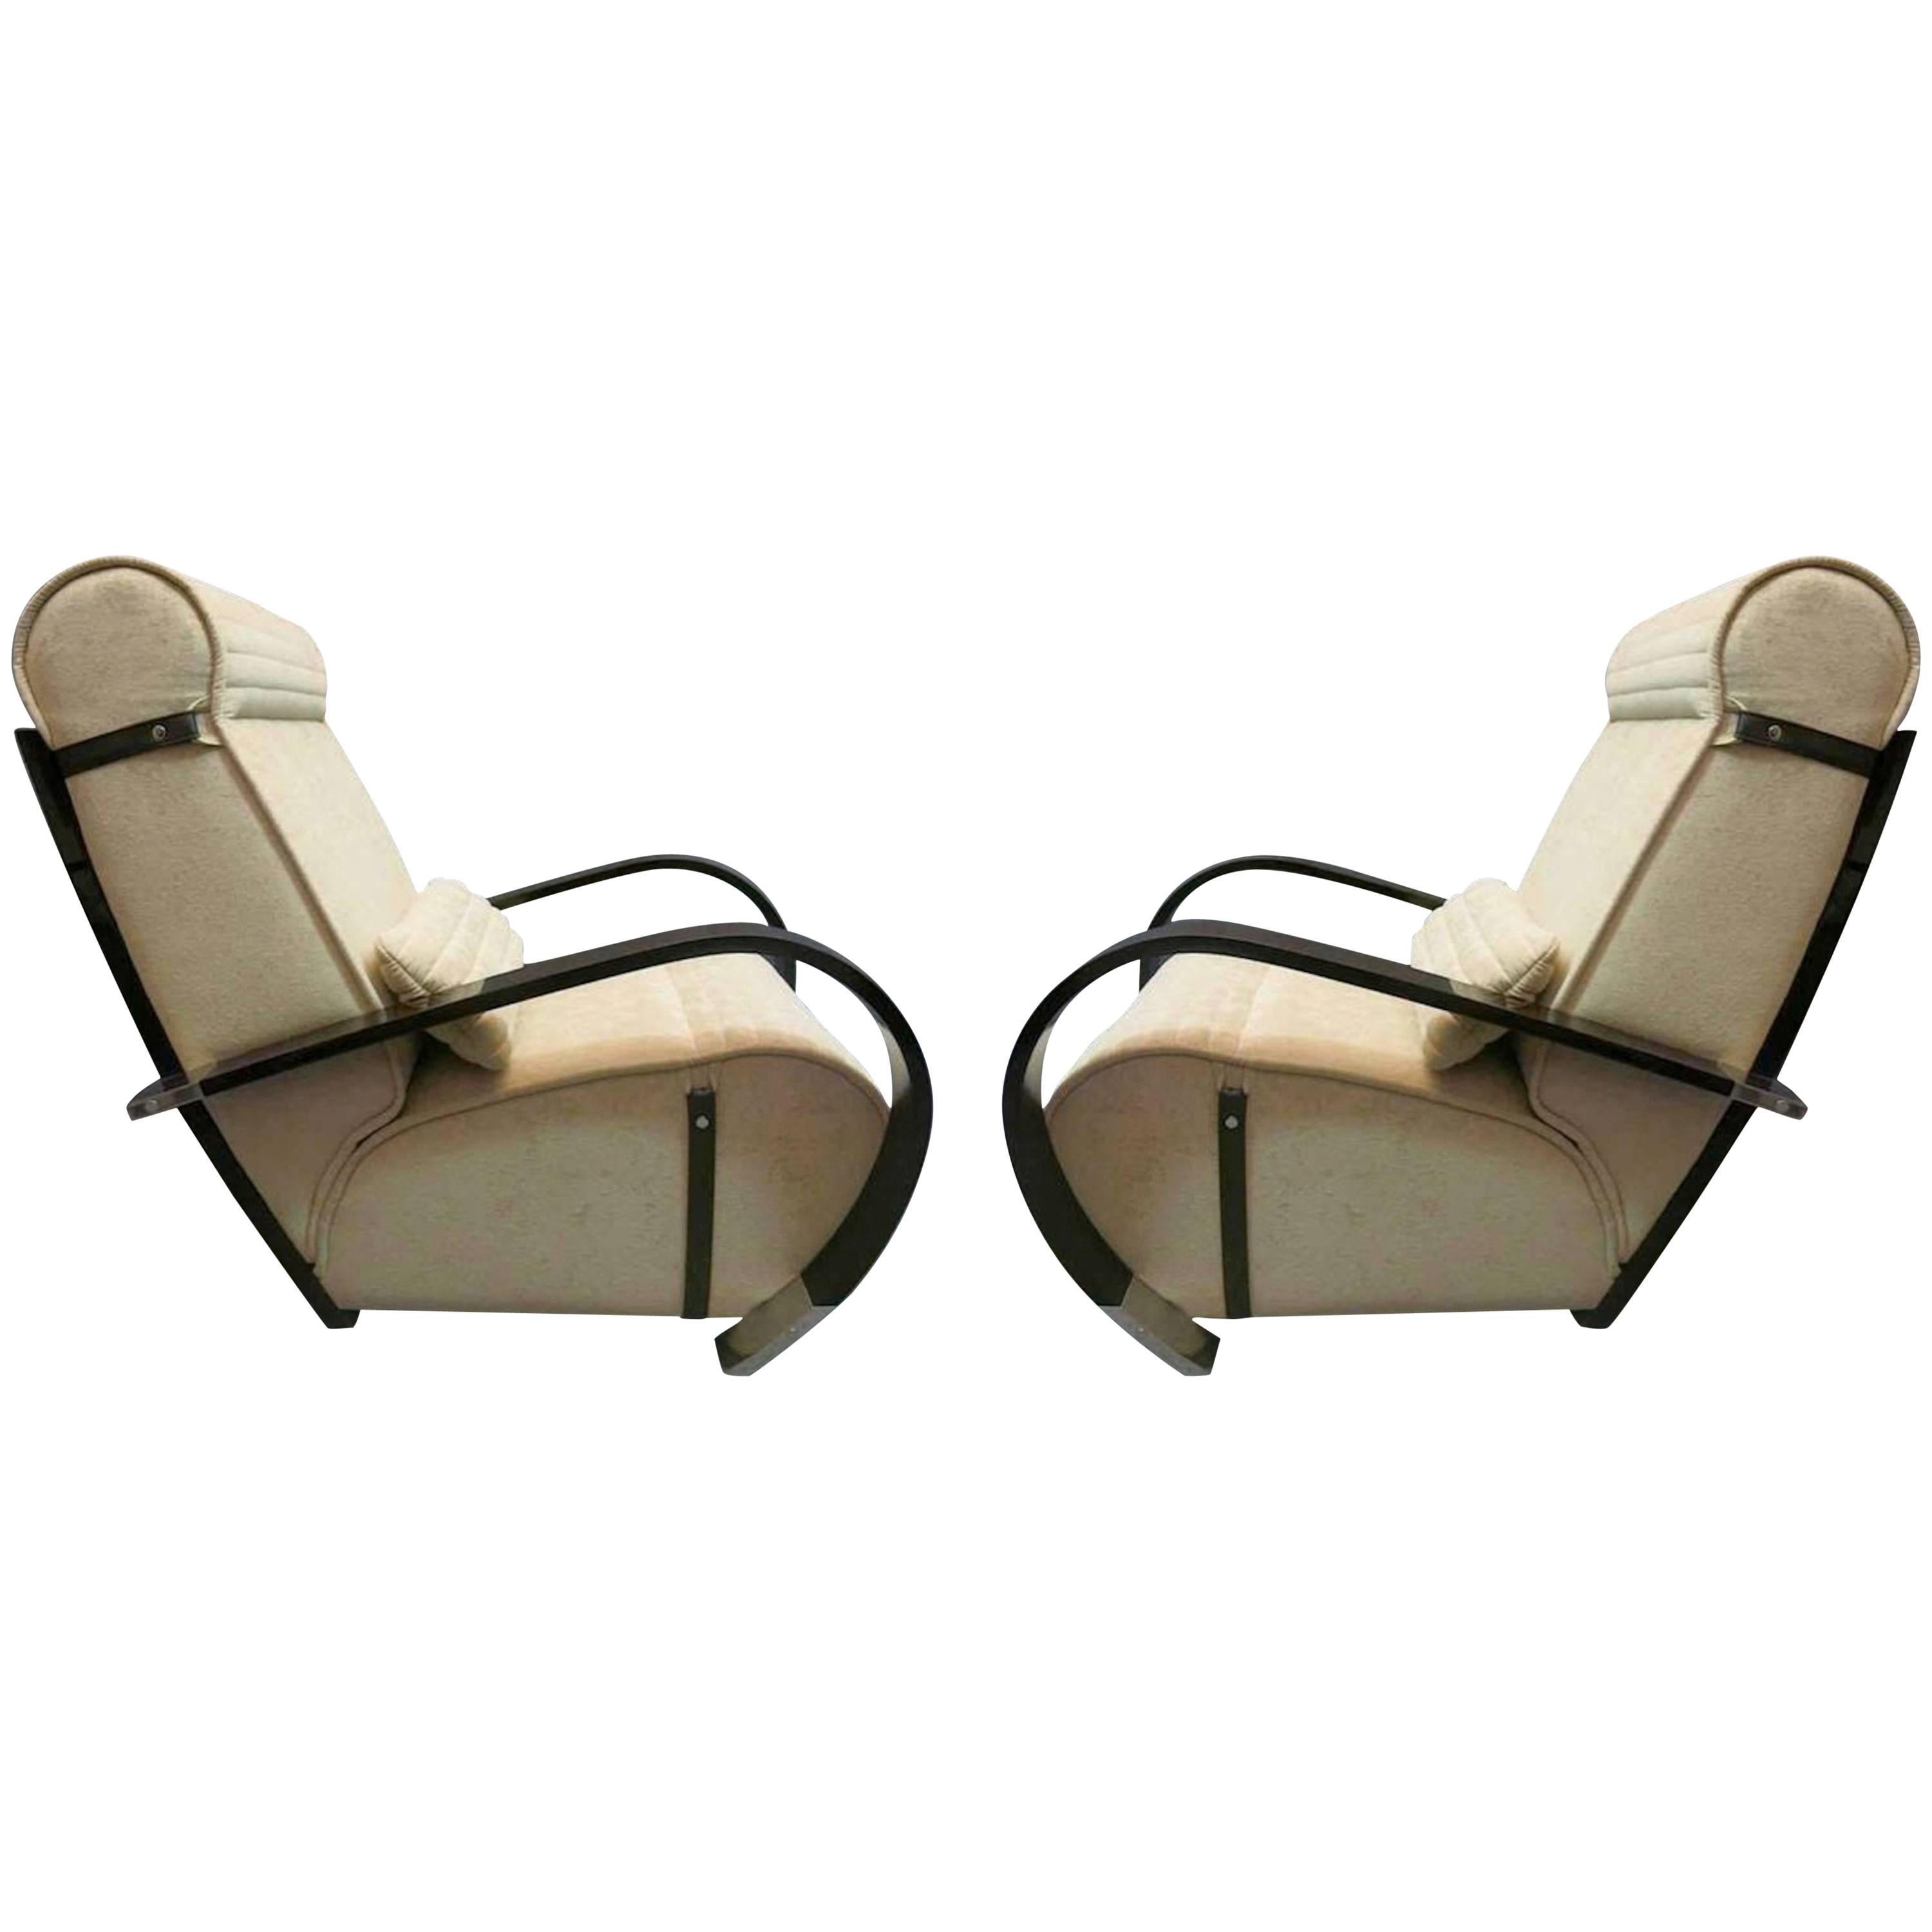 Pair of Midcentury Wood and Velvet Italian Lounge Chairs, 1950